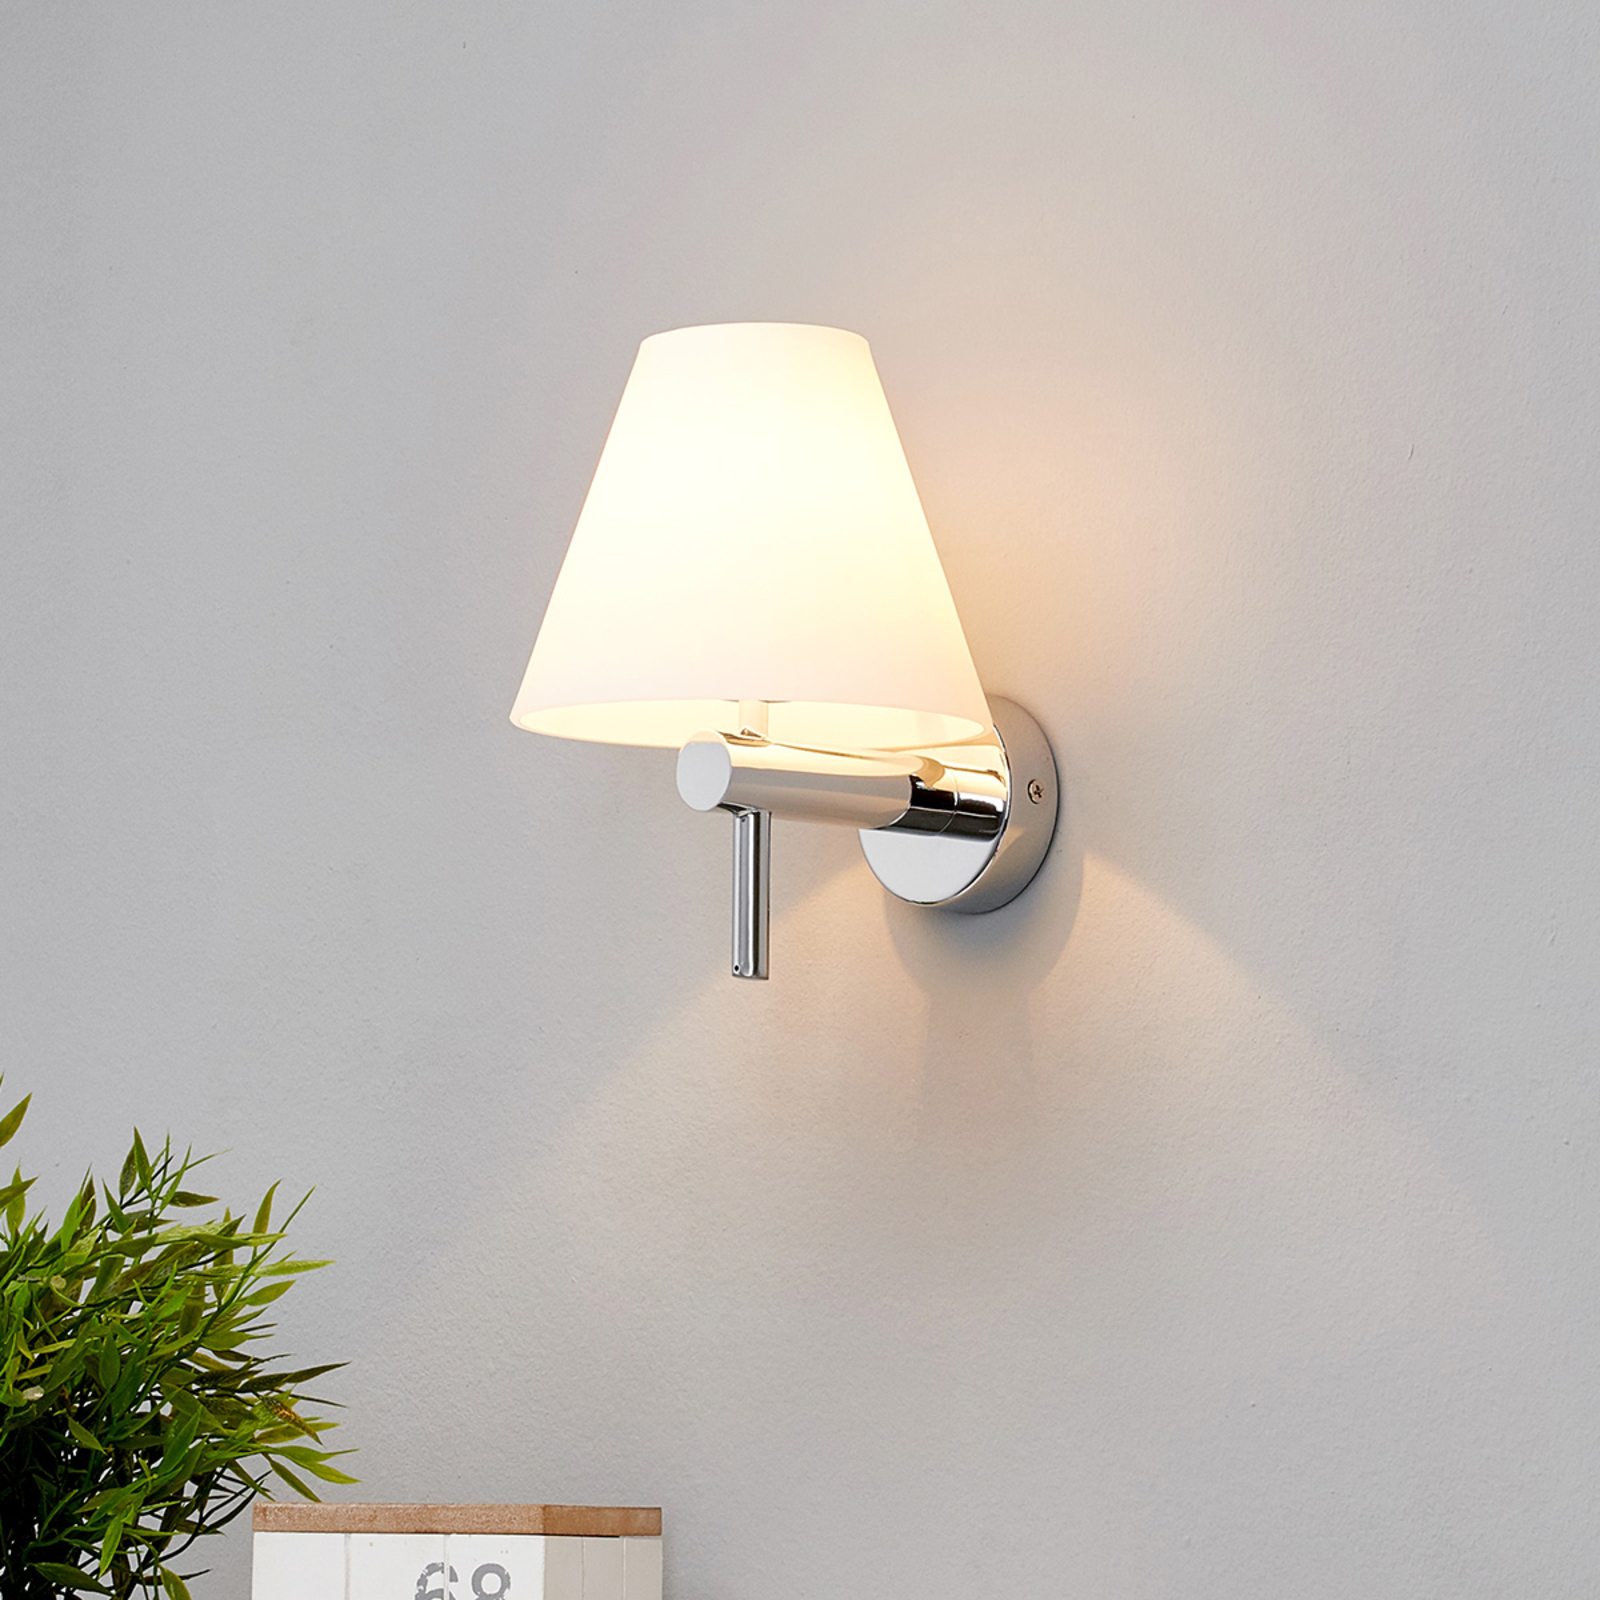 Elegante lampada da bagno Violetta da parete